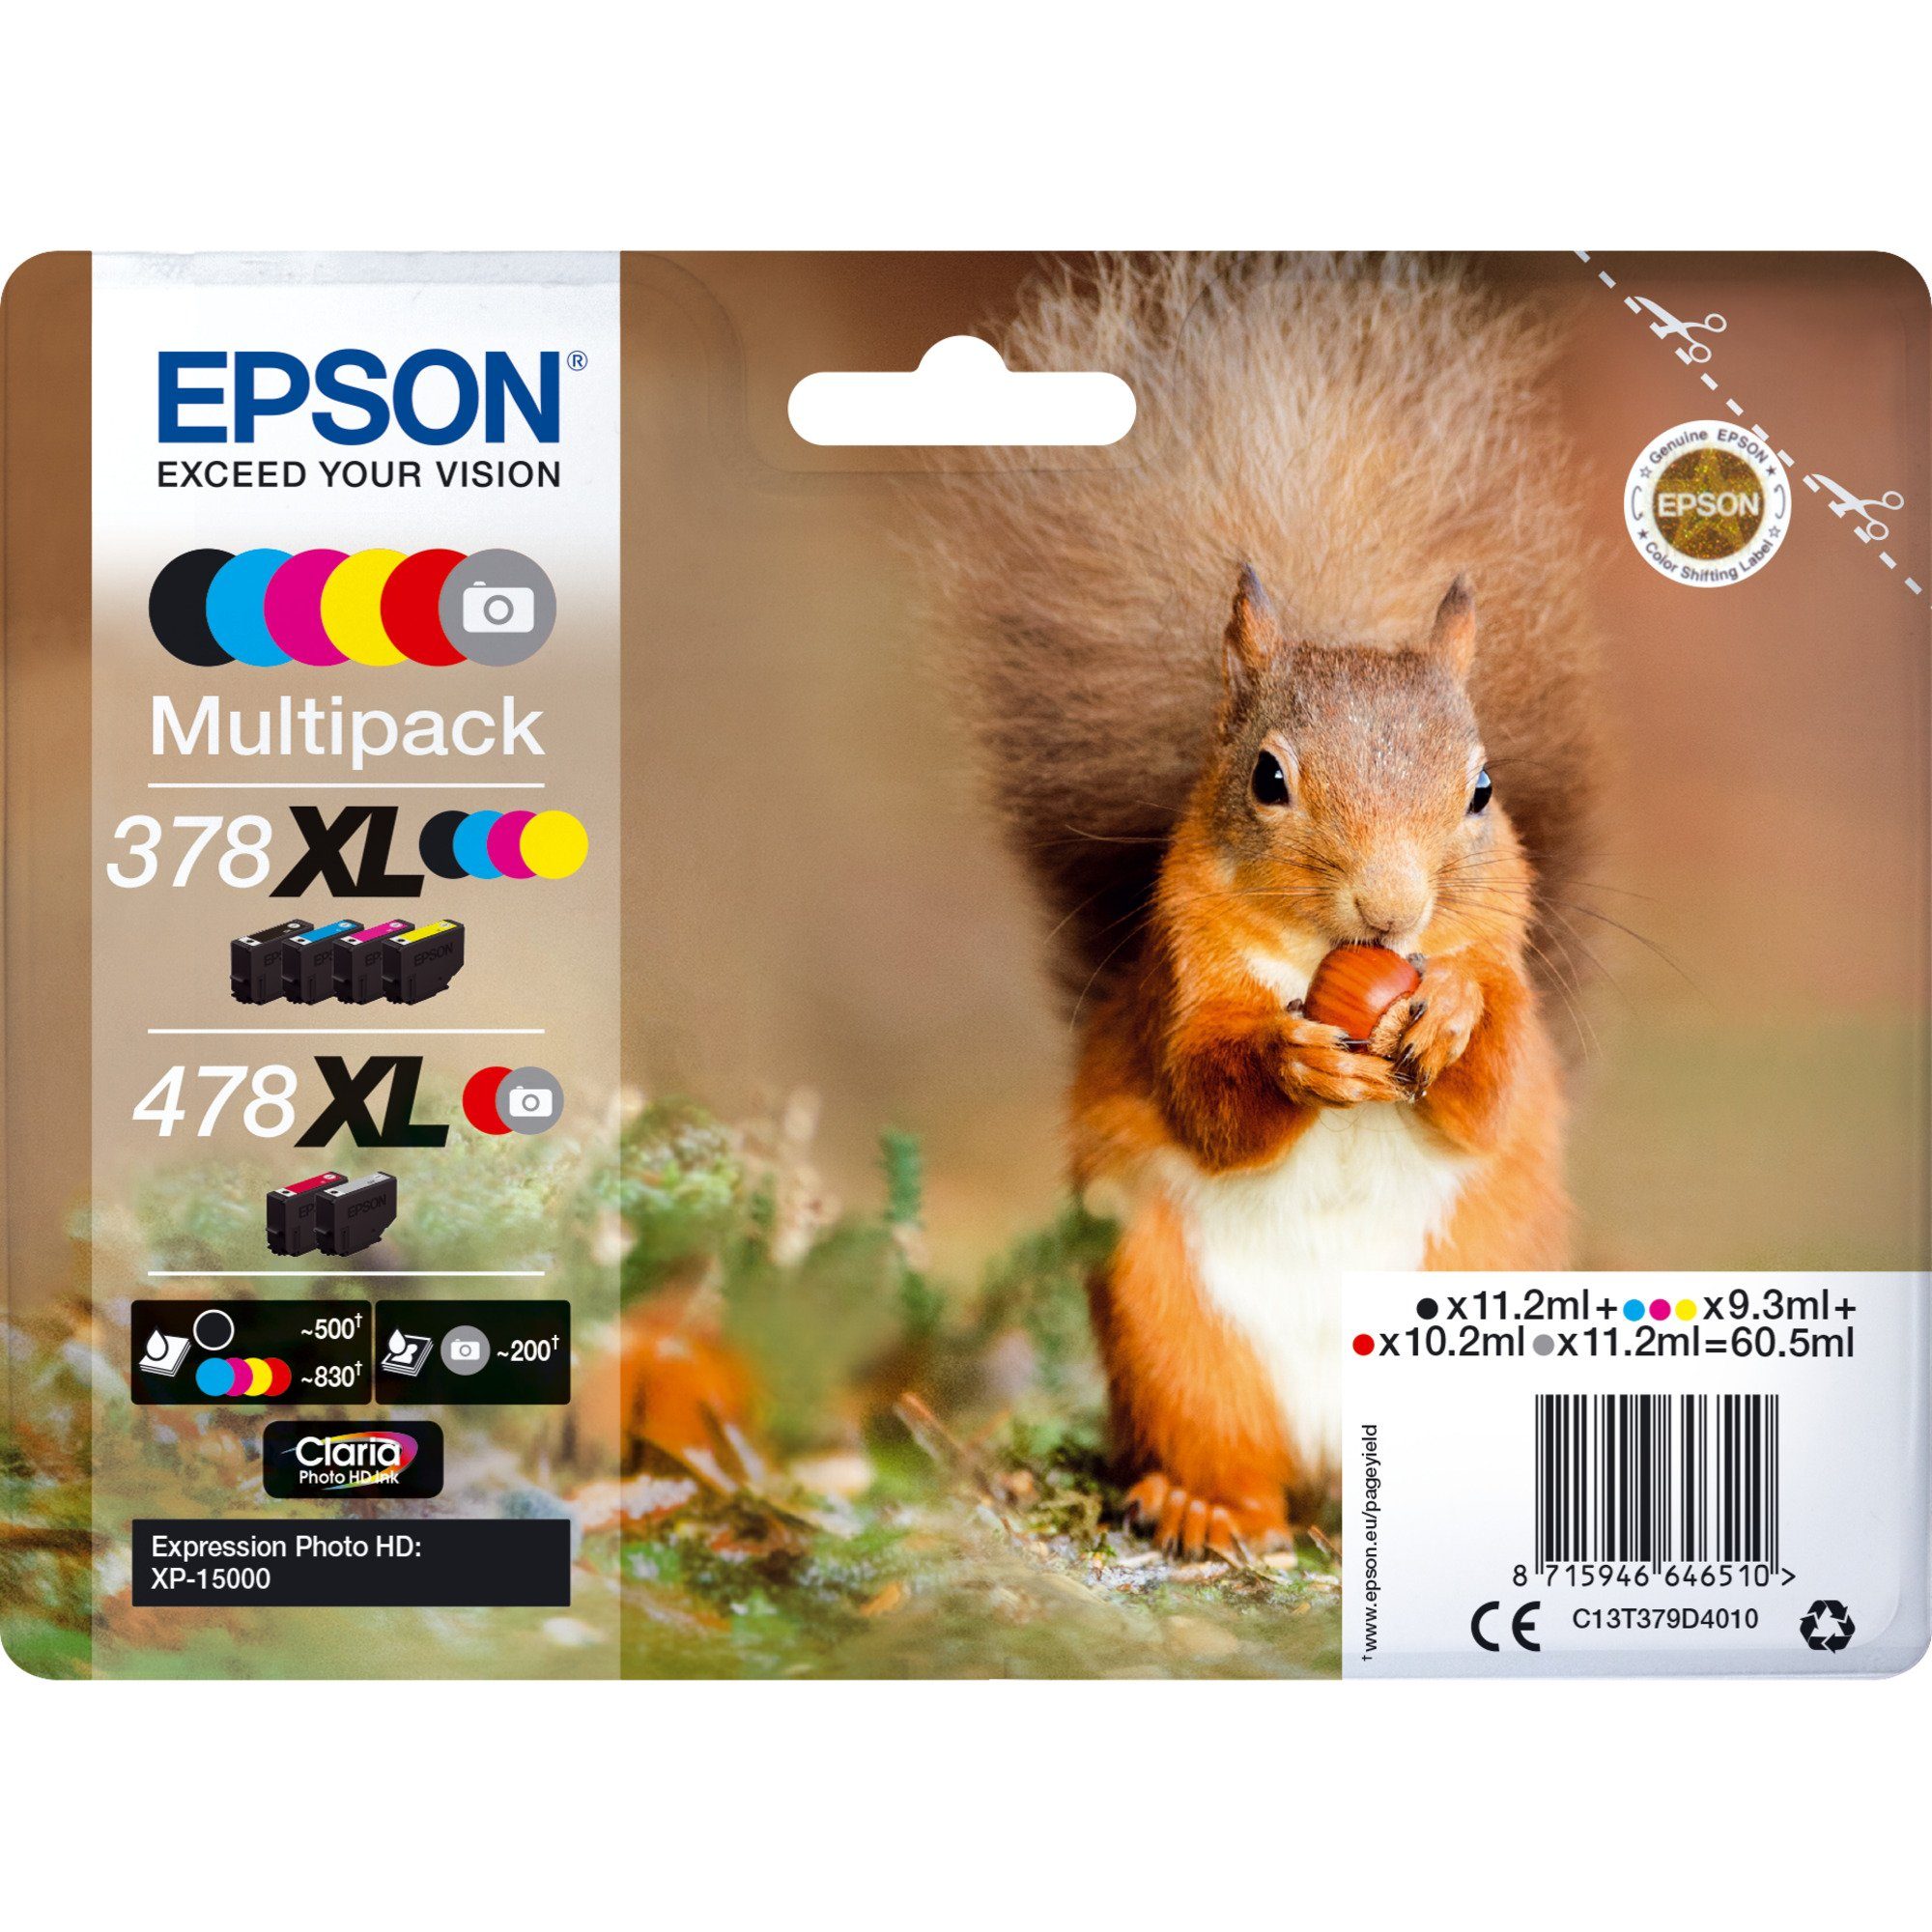 Epson Epson Multipack 378XL/478XL (C13T379D4010), Tinte Tintenpatrone